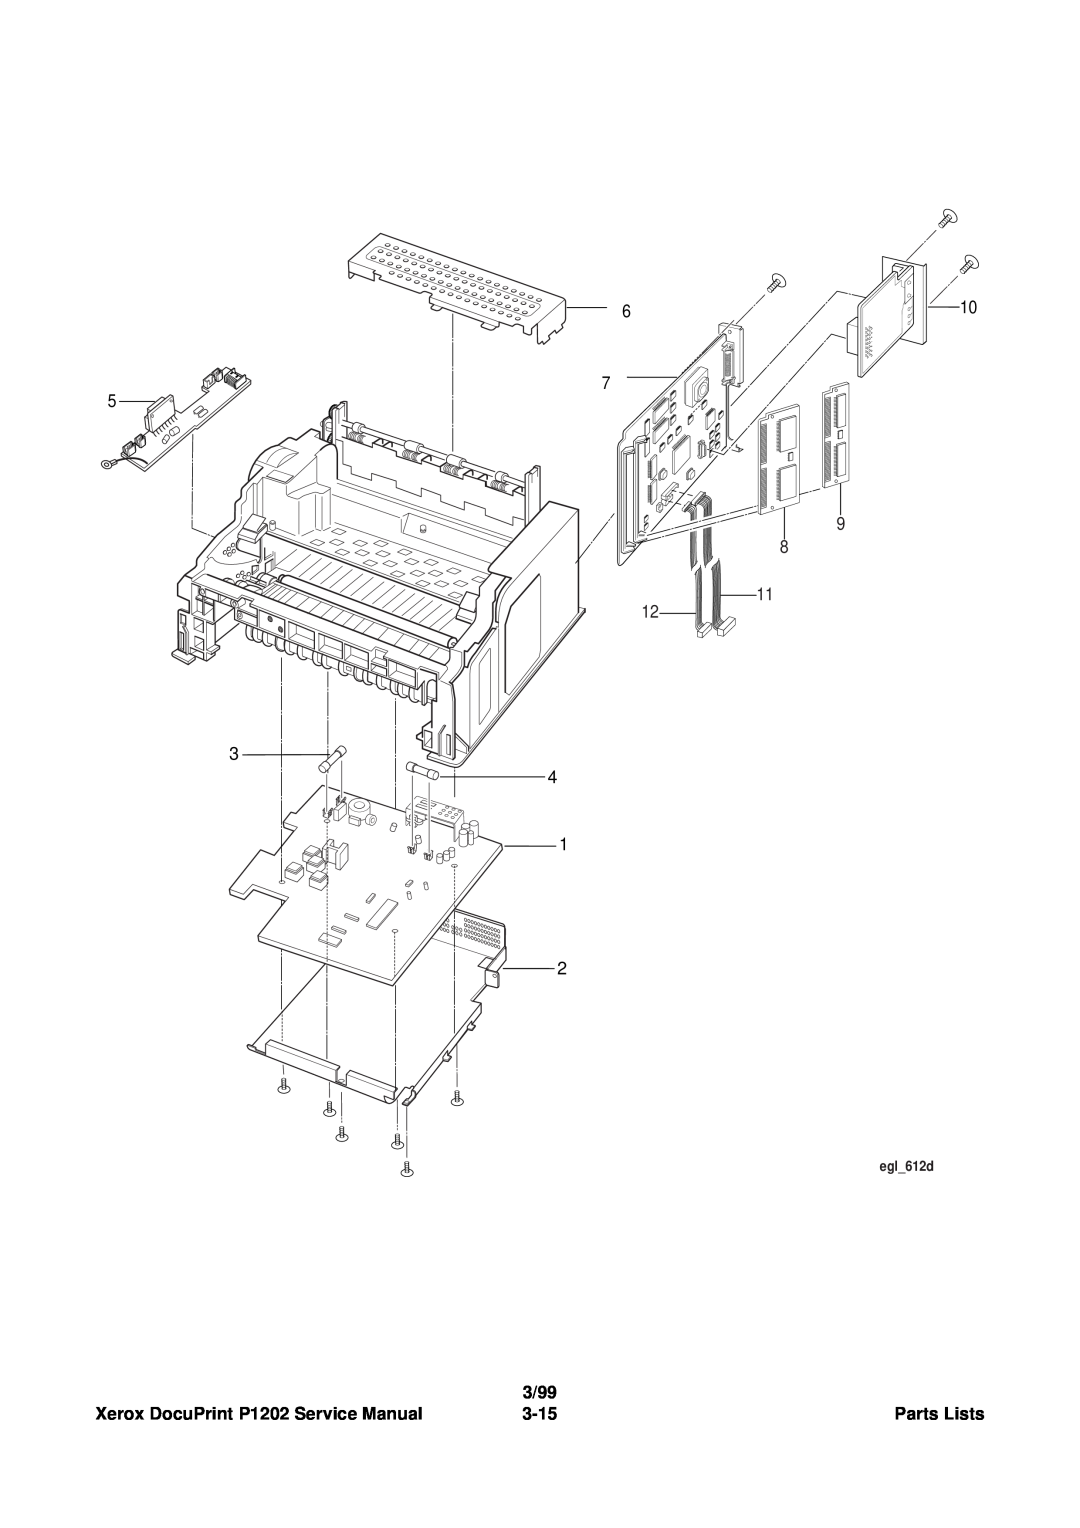 Xerox service manual 3/99, Xerox DocuPrint P1202 Service Manual, 3-15, Parts Lists, egl612d 